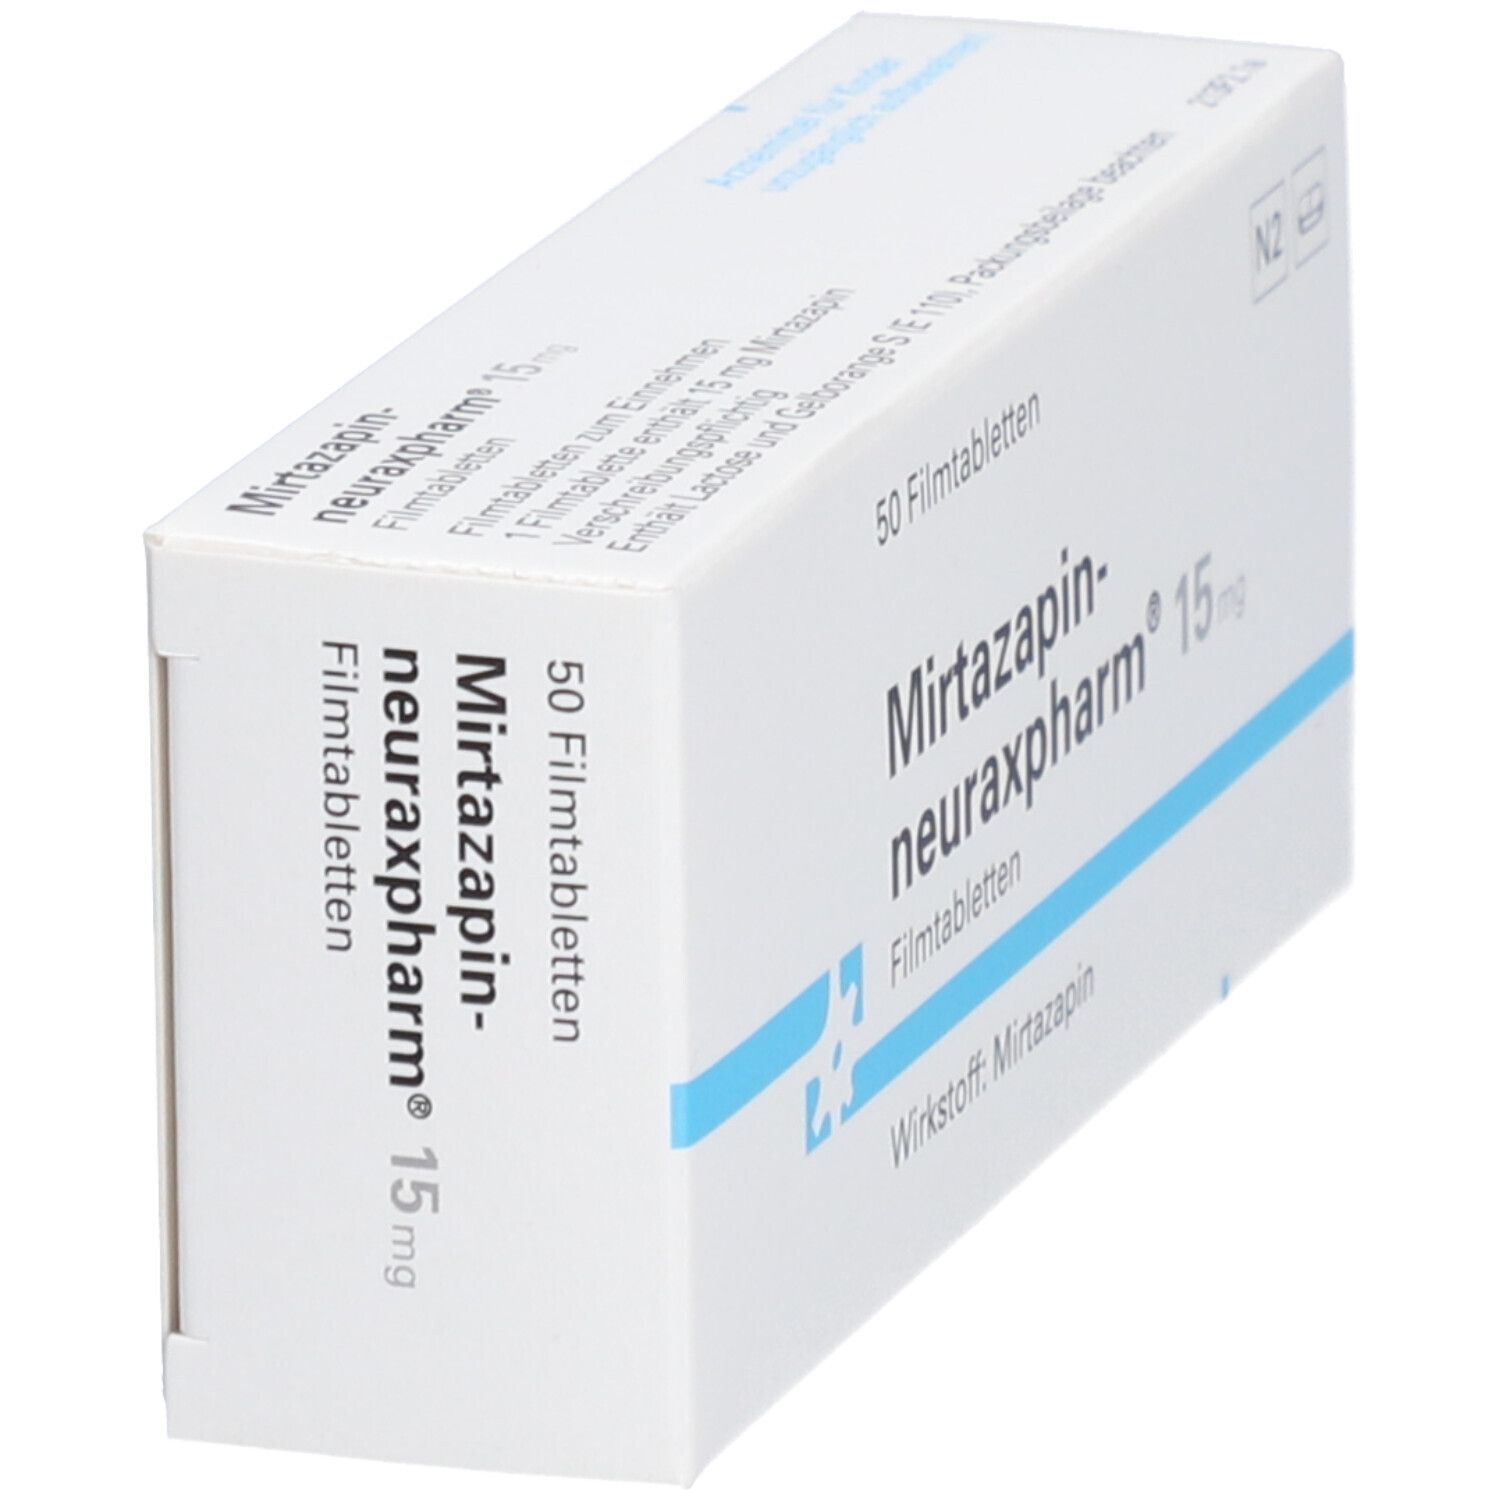 Mirtazapin-neuraxpharm® 15 mg